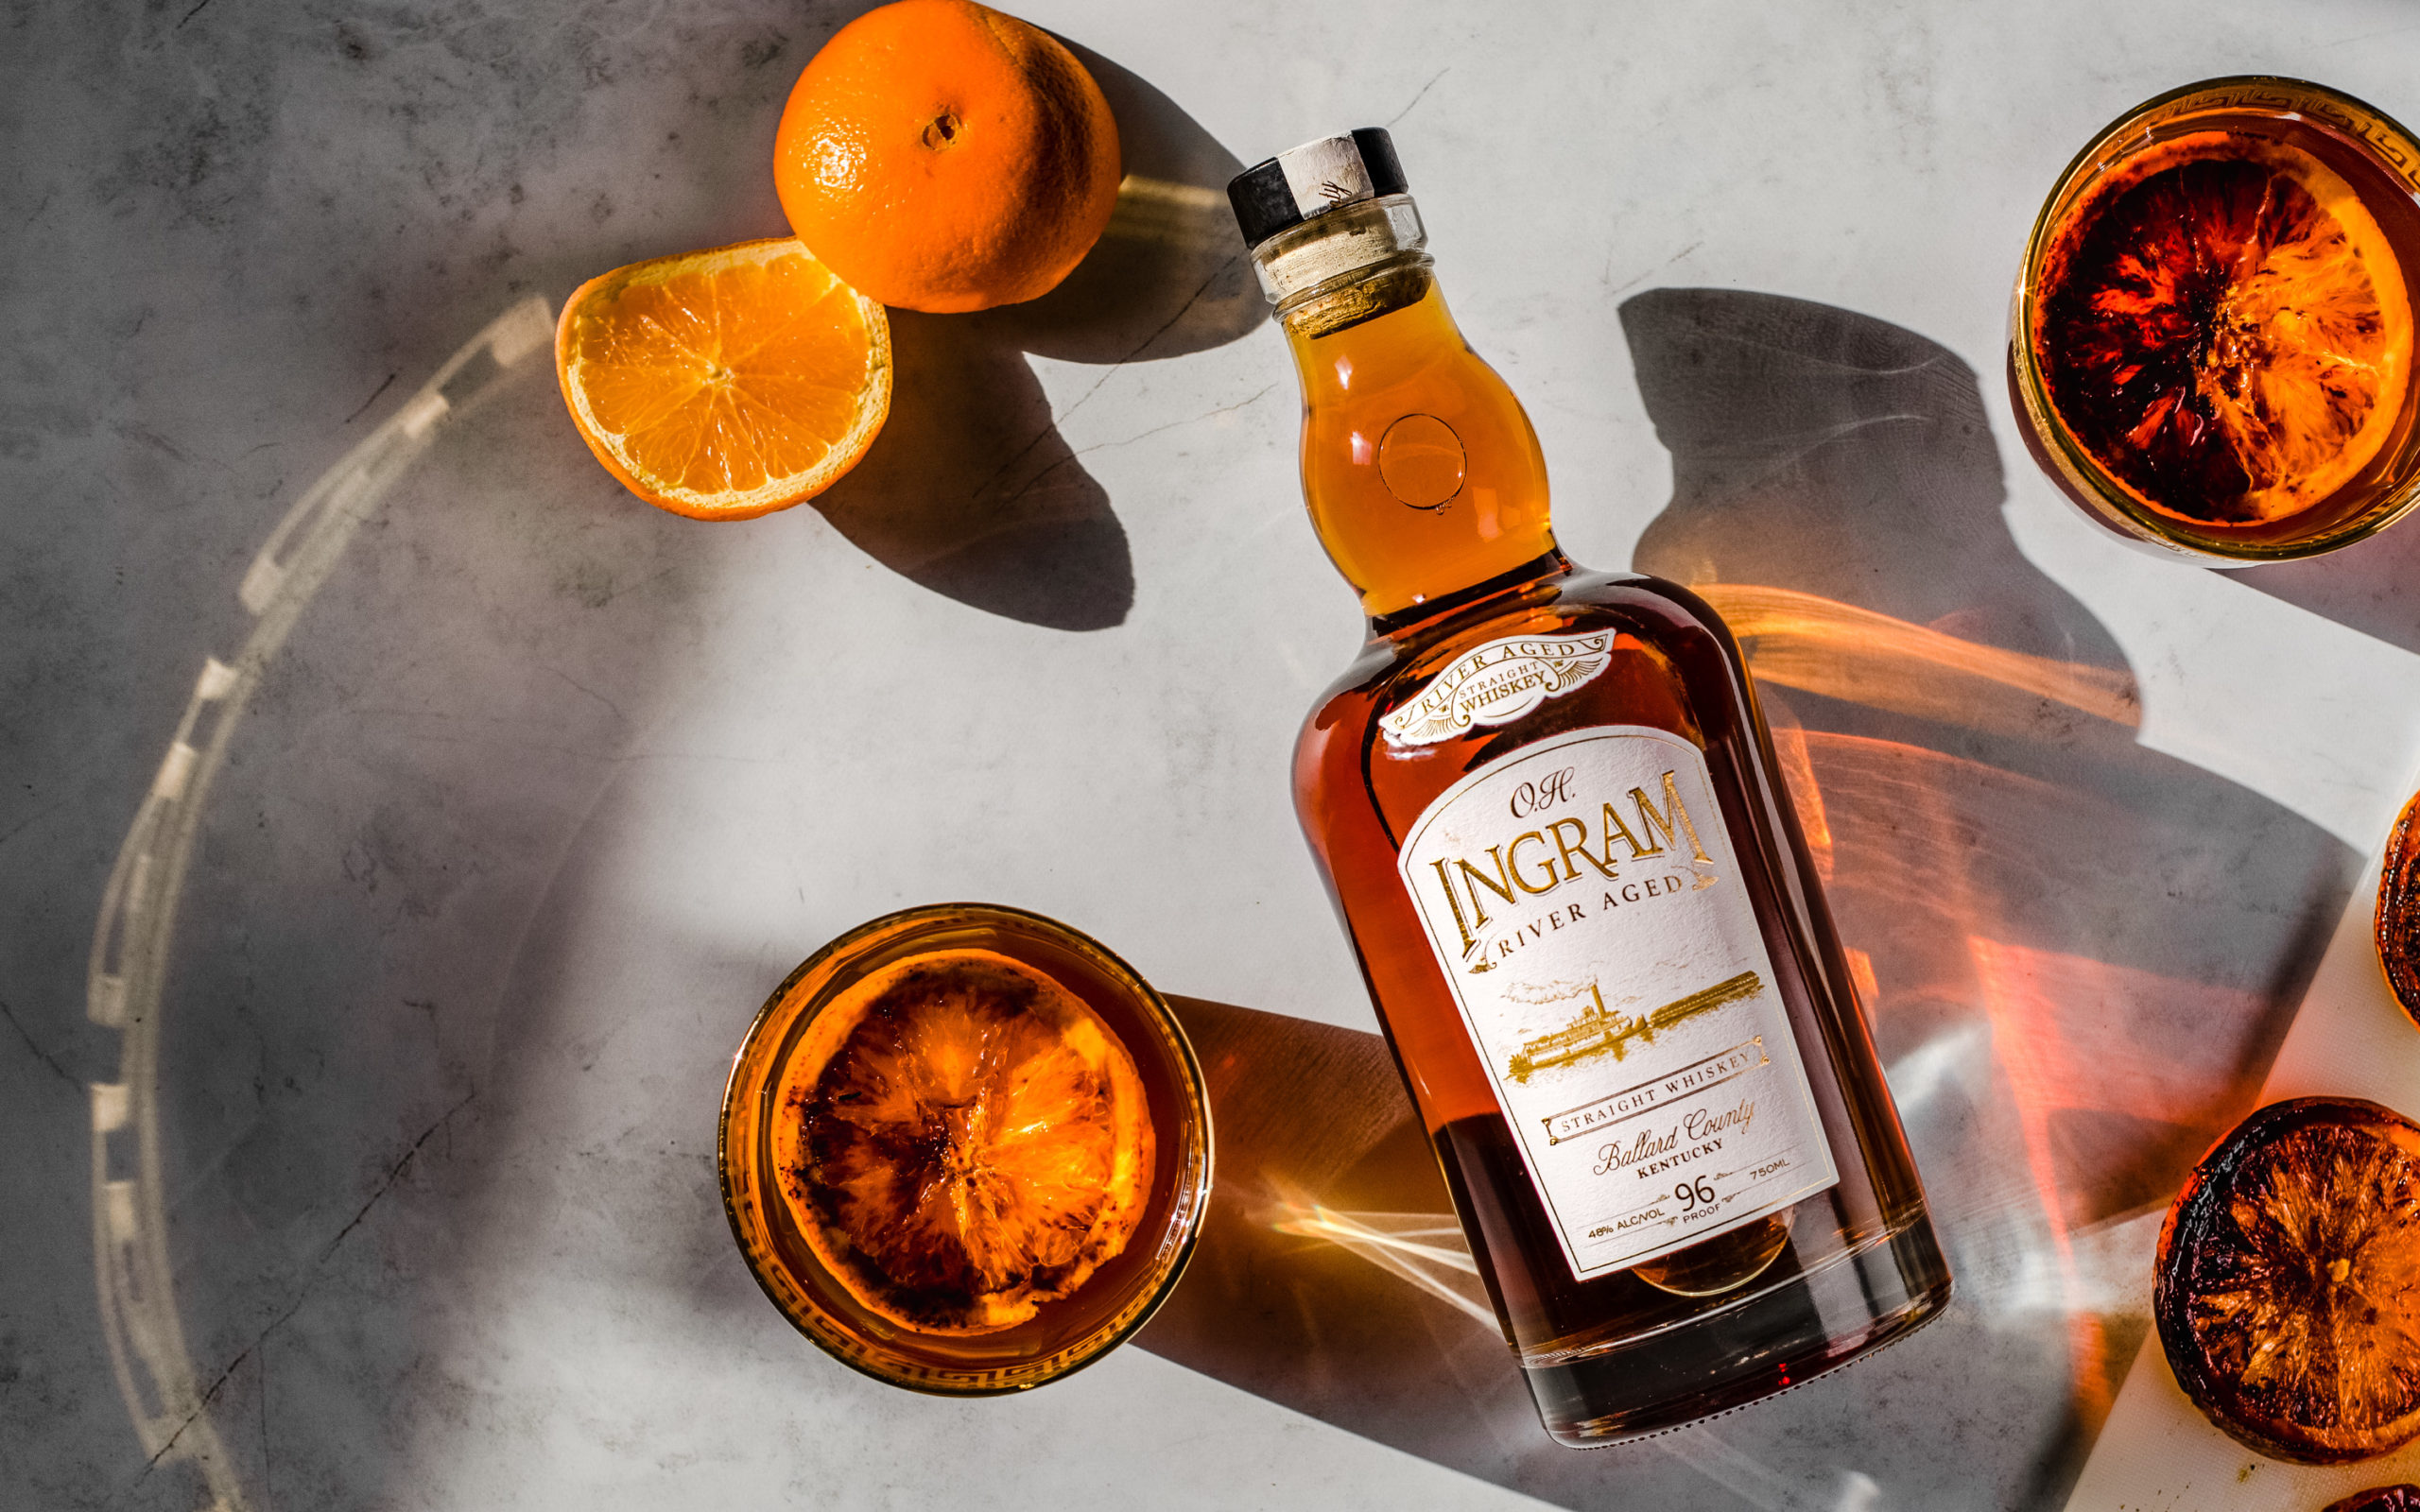 O.H Ingram River Aged Straight Whiskey - Ariel Beauty Shot - Orange Peel - White Label